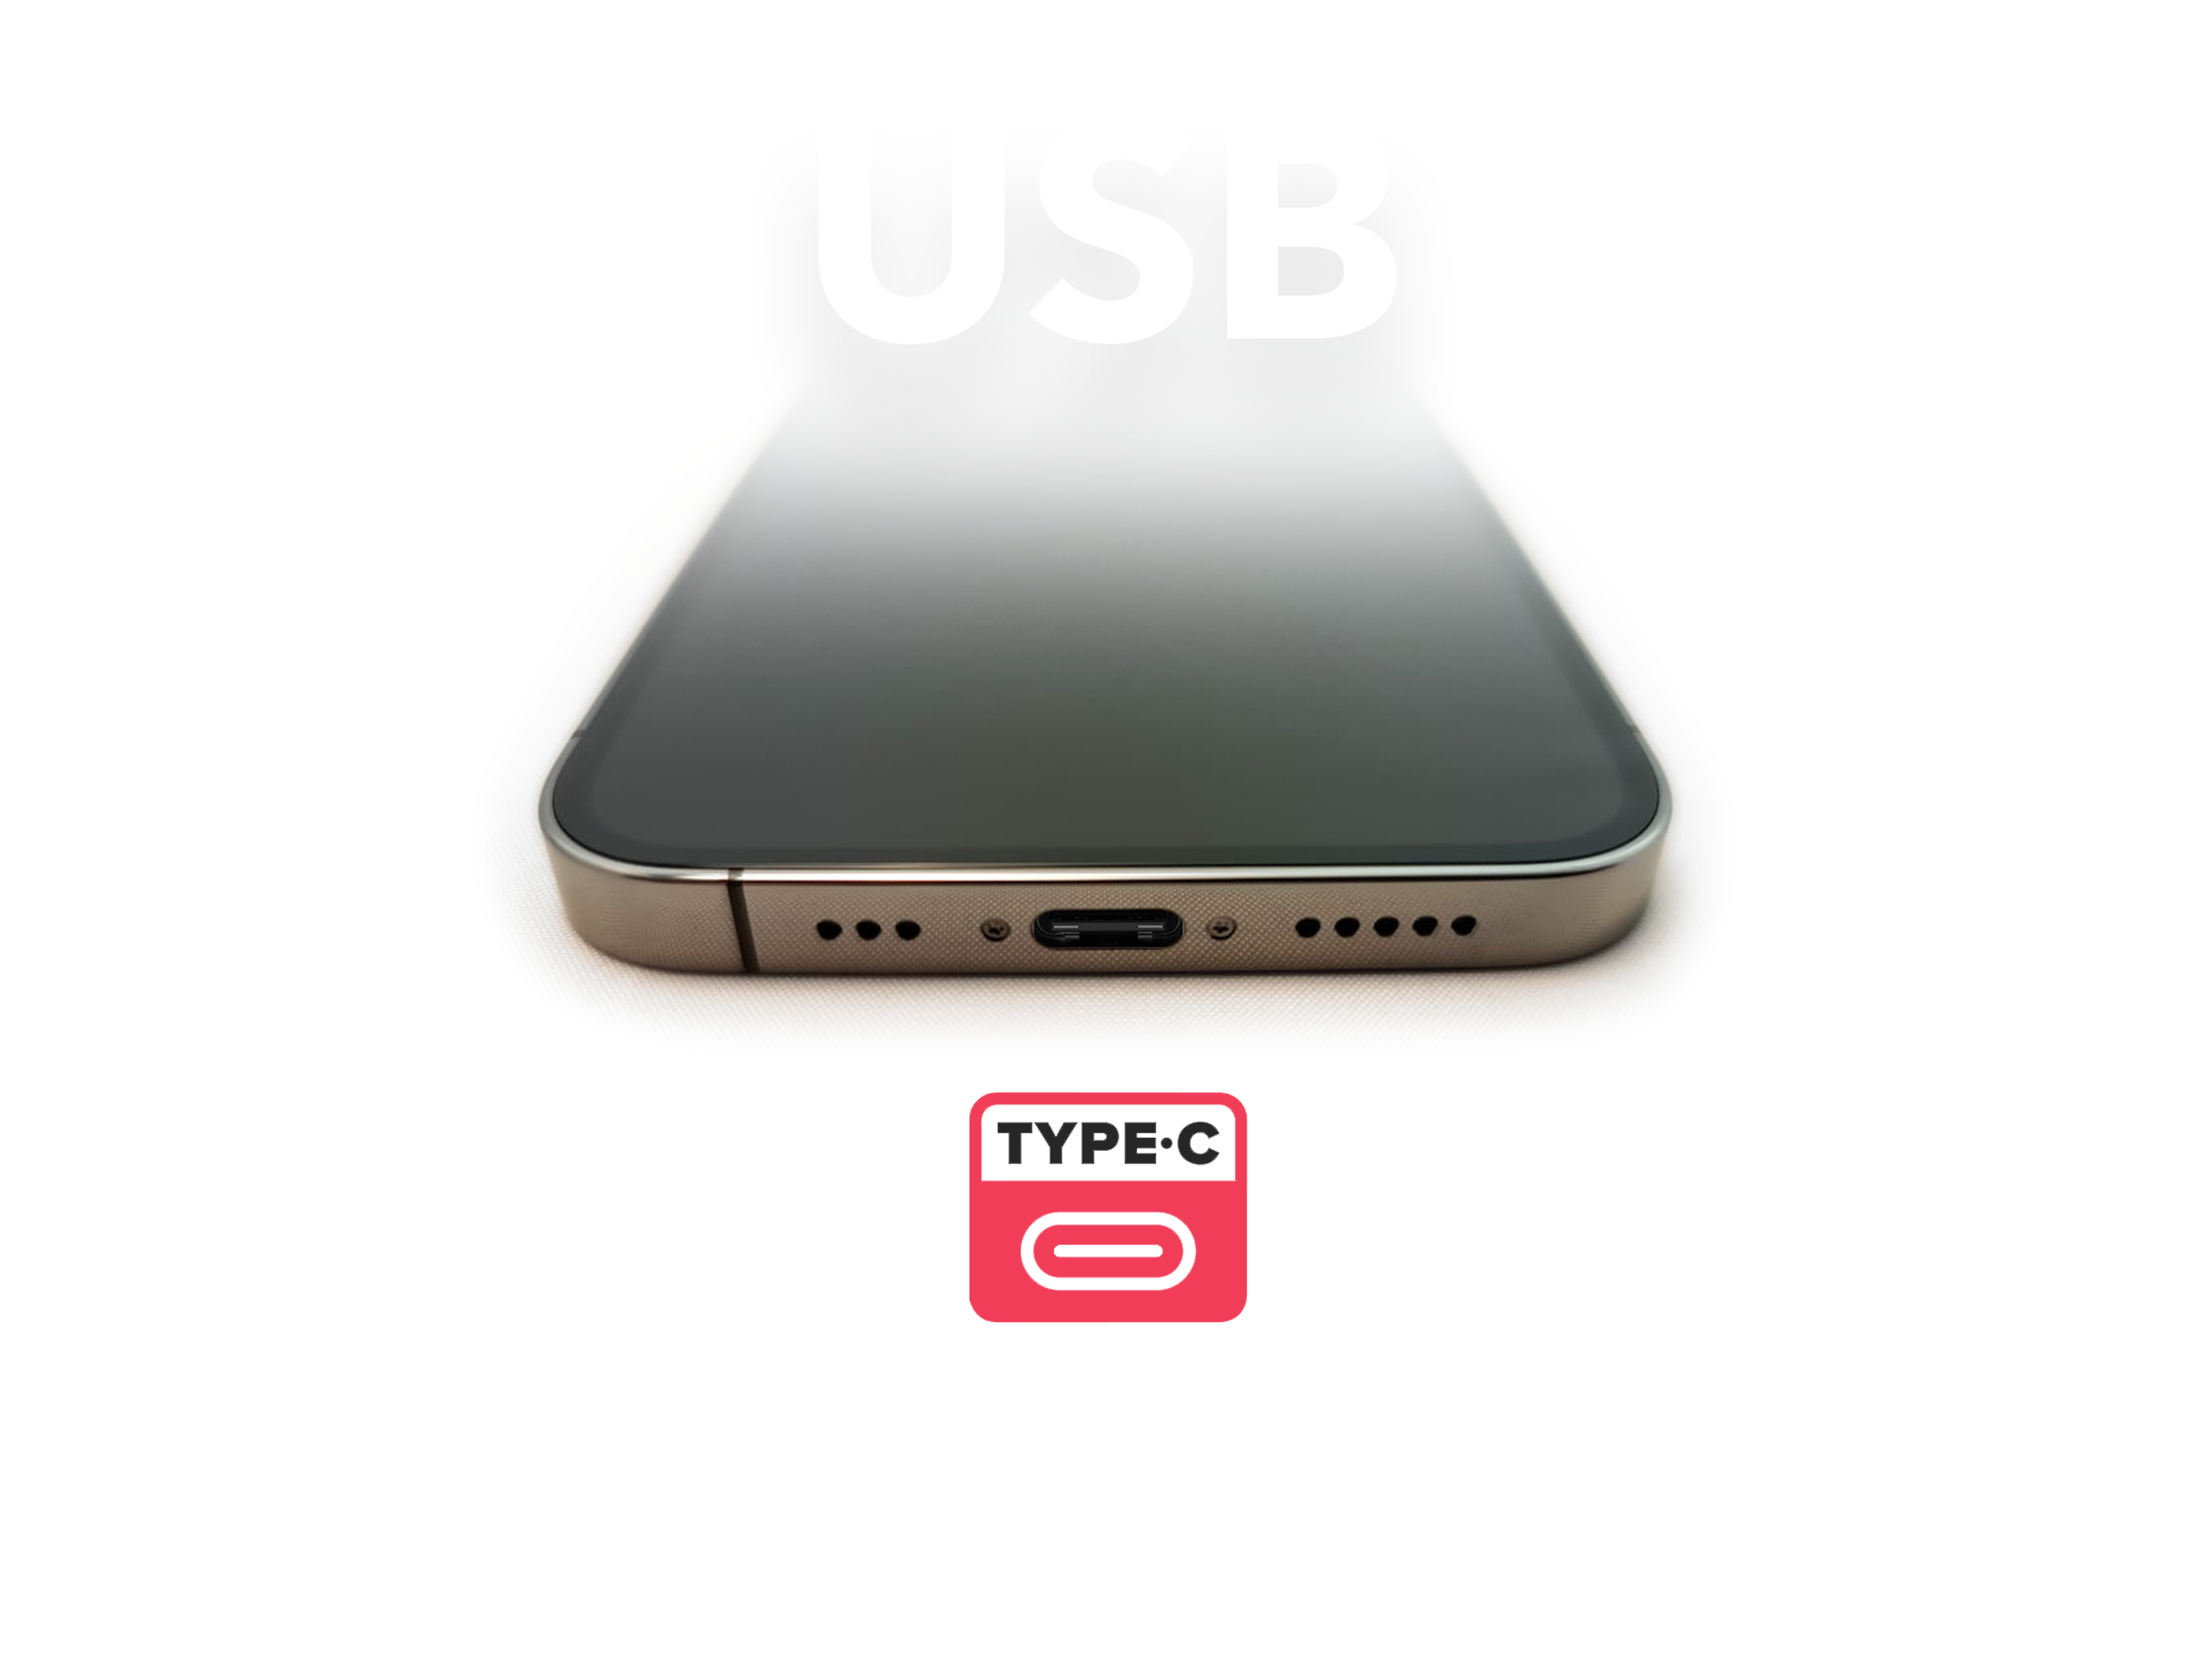 iPhone 12 Pro Max with USB-C port